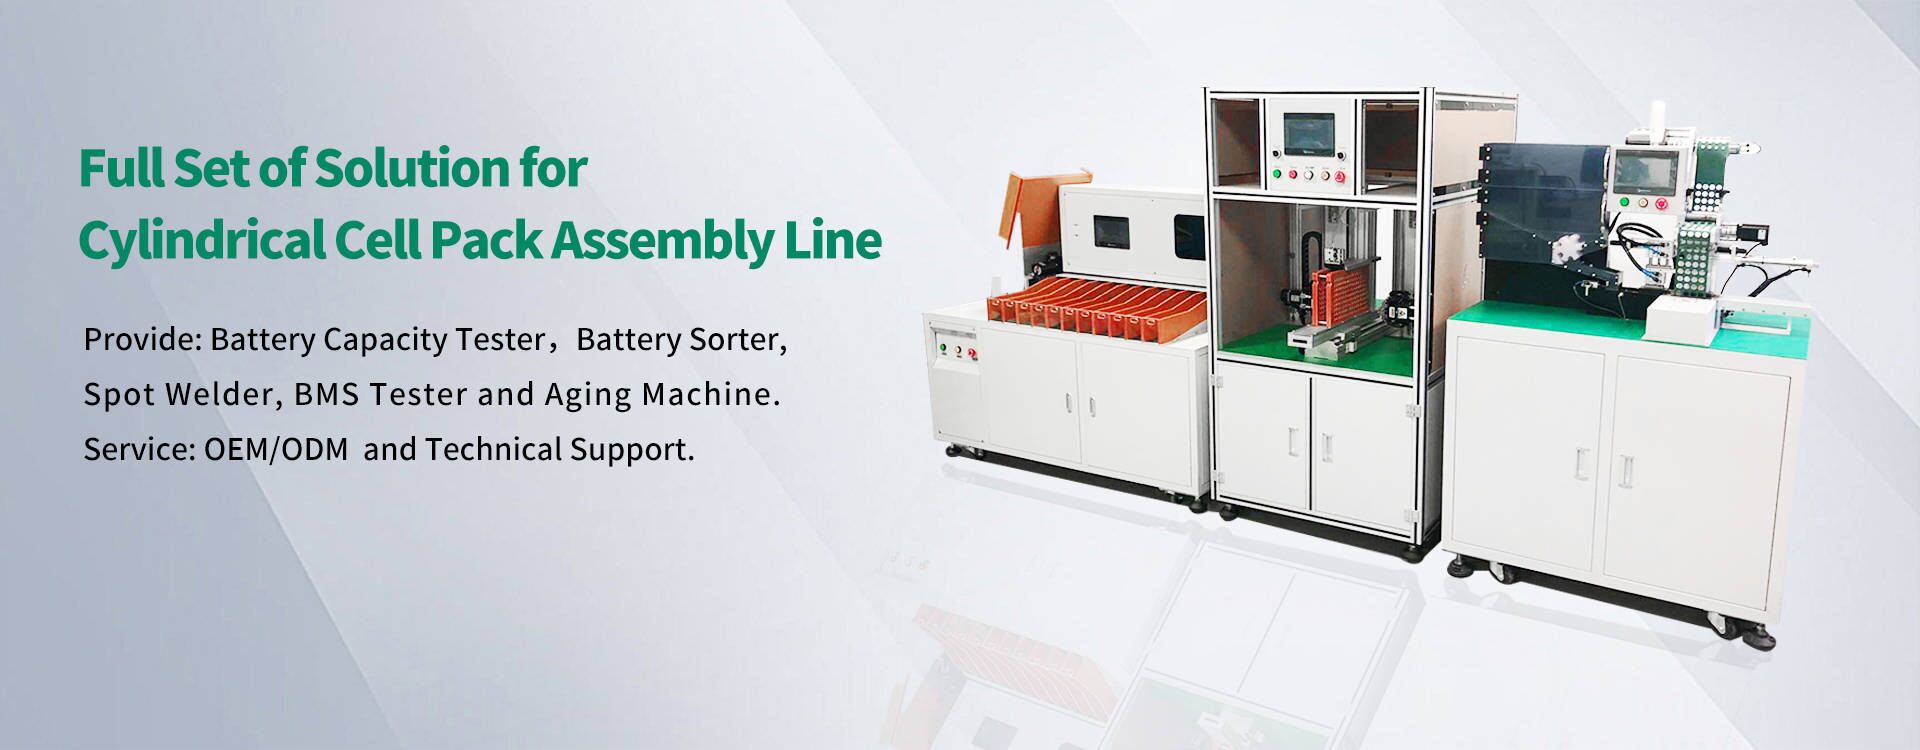 Full Set of Soution For Li-ion Battery Pack Assembly Line